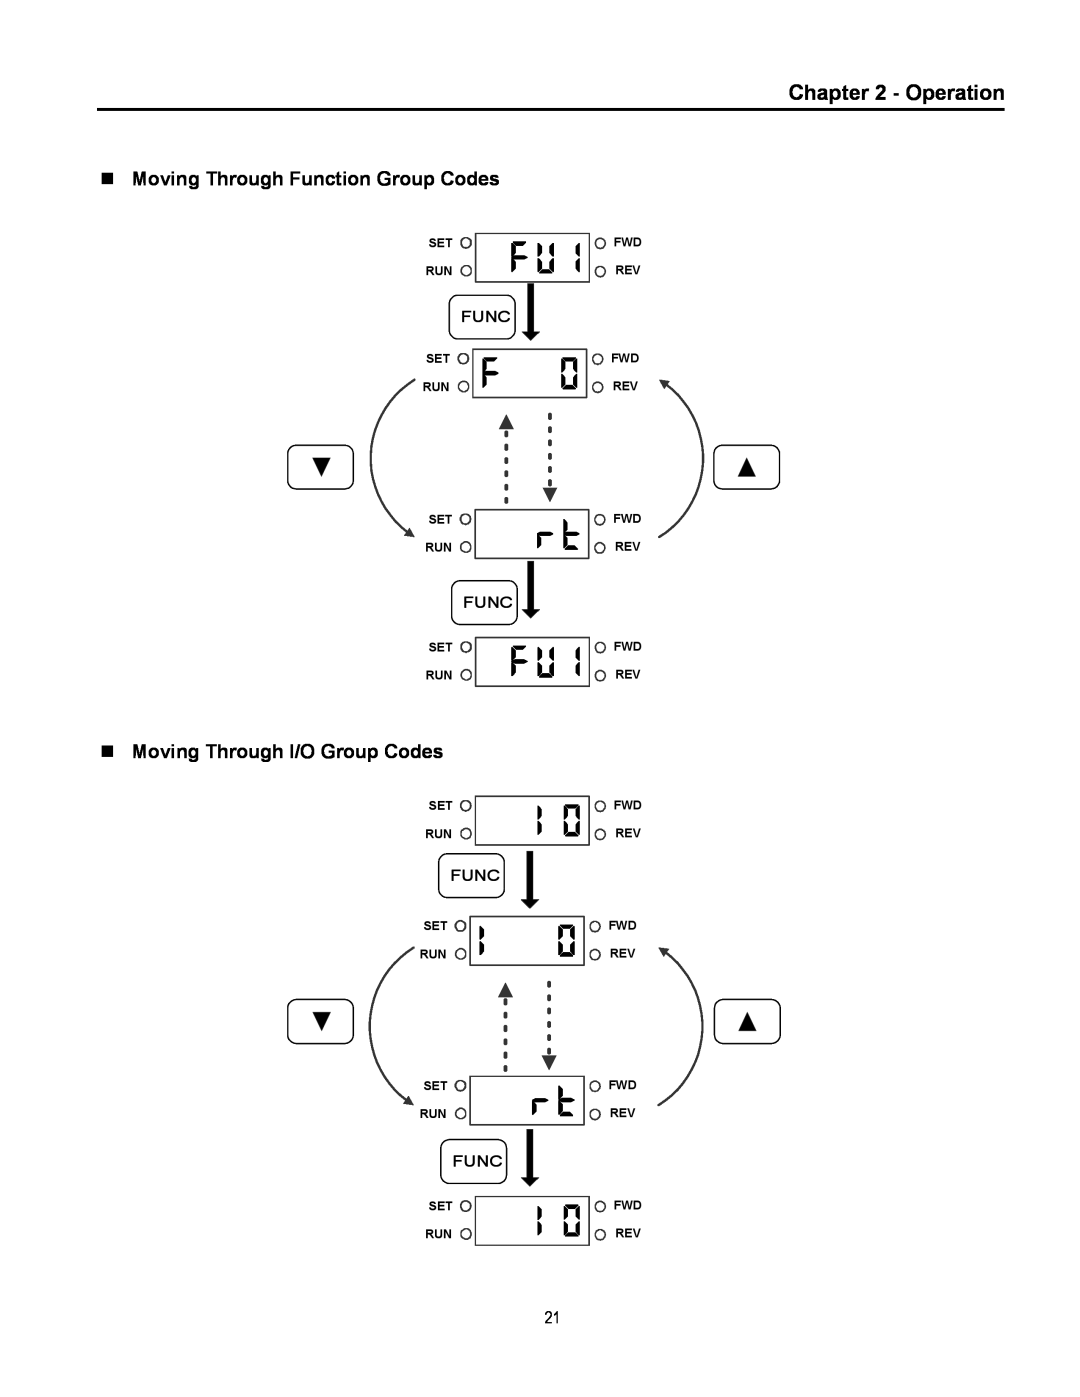 Cleveland Range inverter manual Operation, Moving Through Function Group Codes, Moving Through I/O Group Codes 